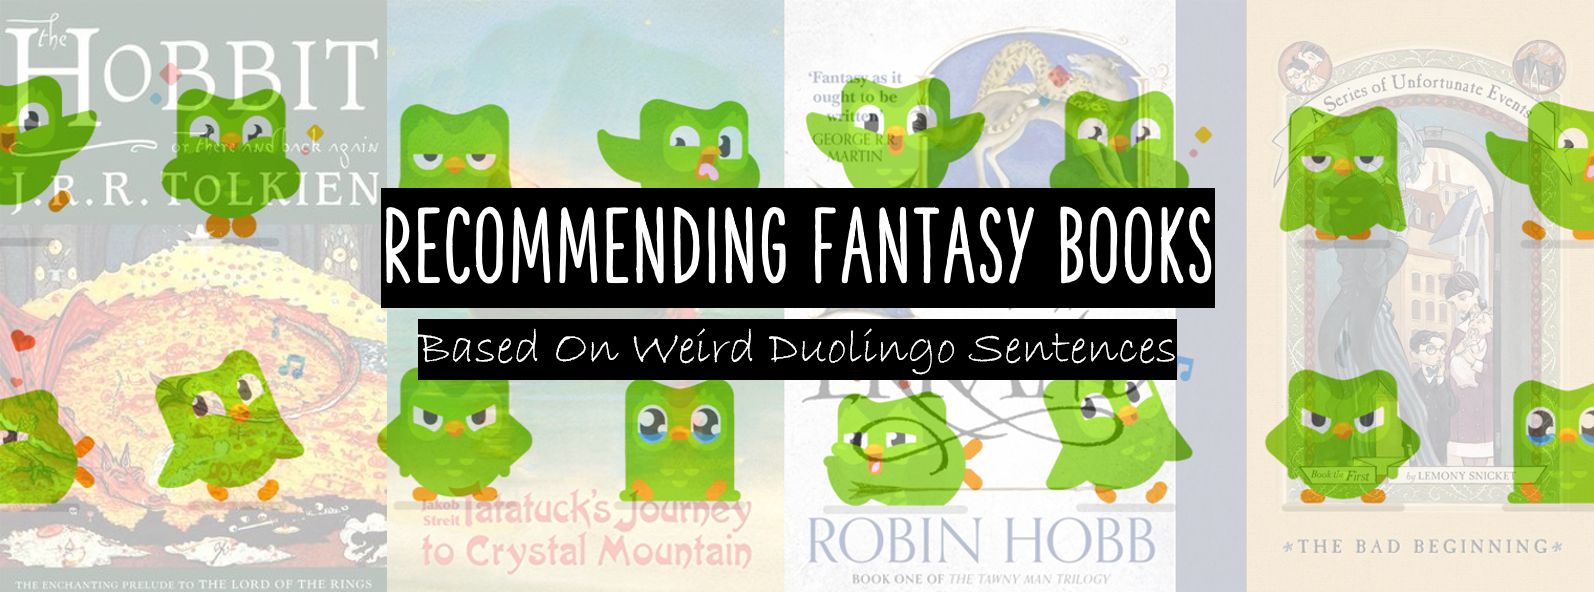 Recommending Books Based On Weird Duolingo Sentences || Fantasy Edition